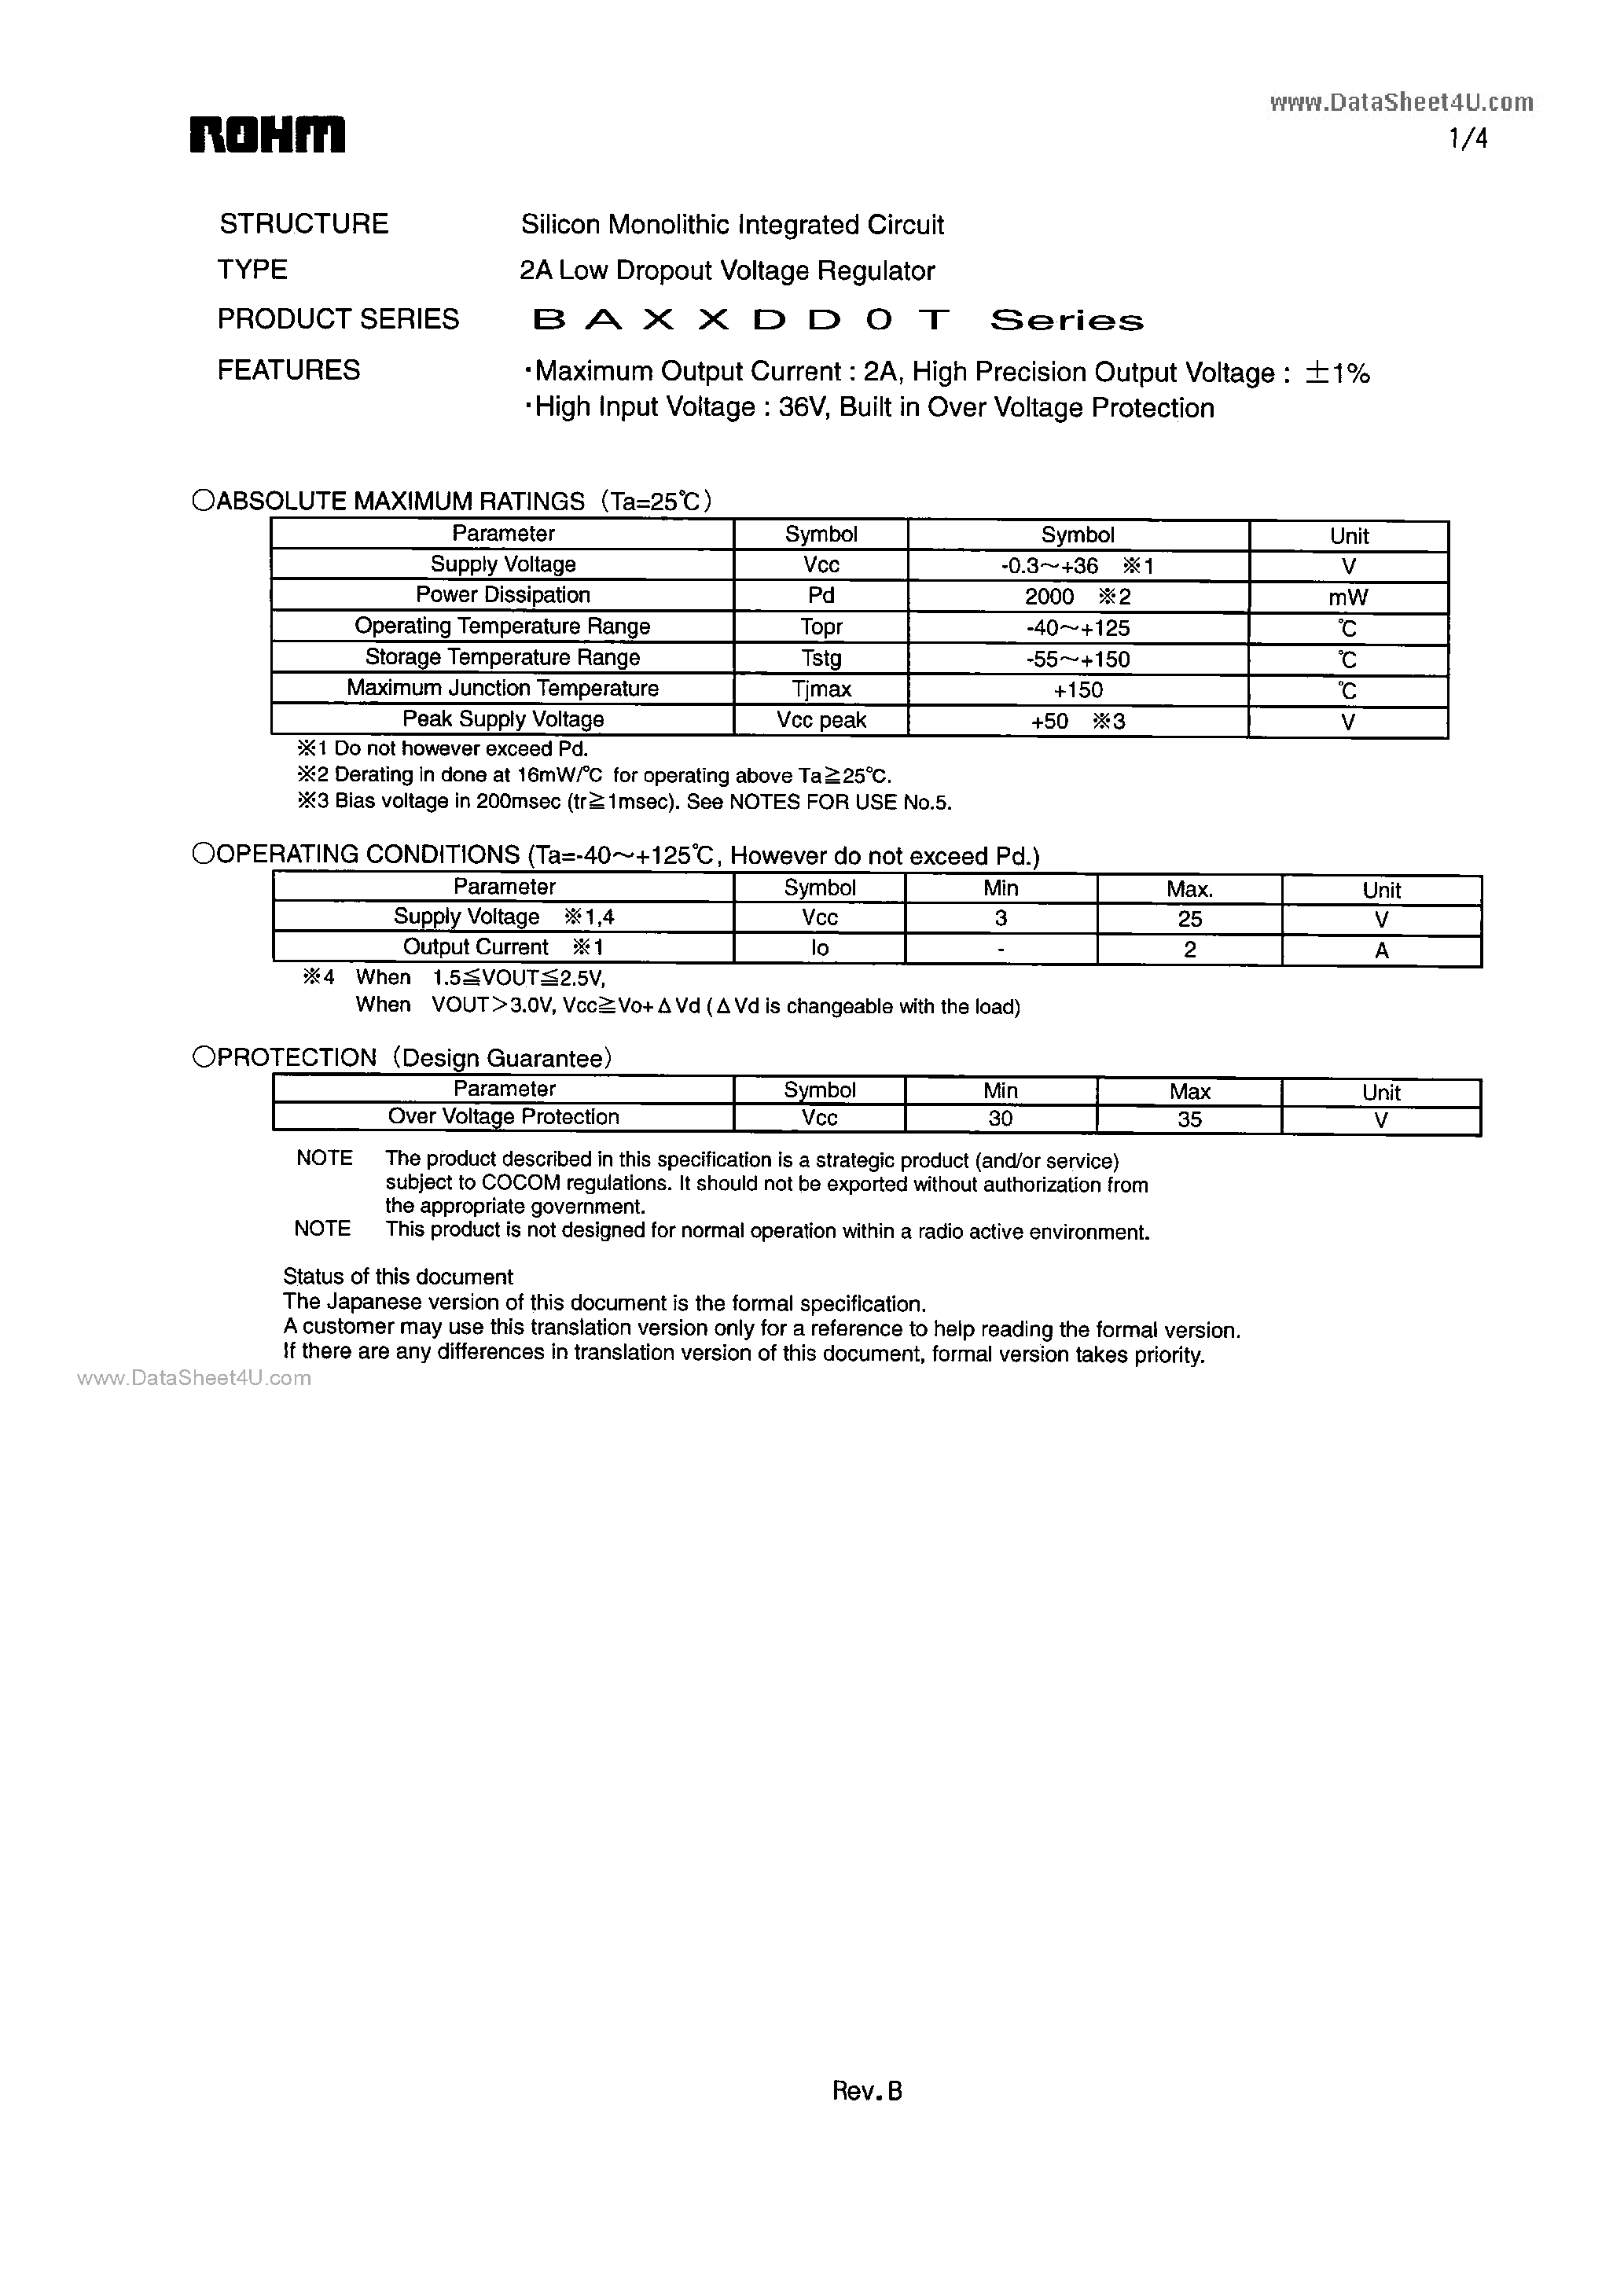 Datasheet BA25DD0T - 2A Low Dropout Voltage Regulator page 1